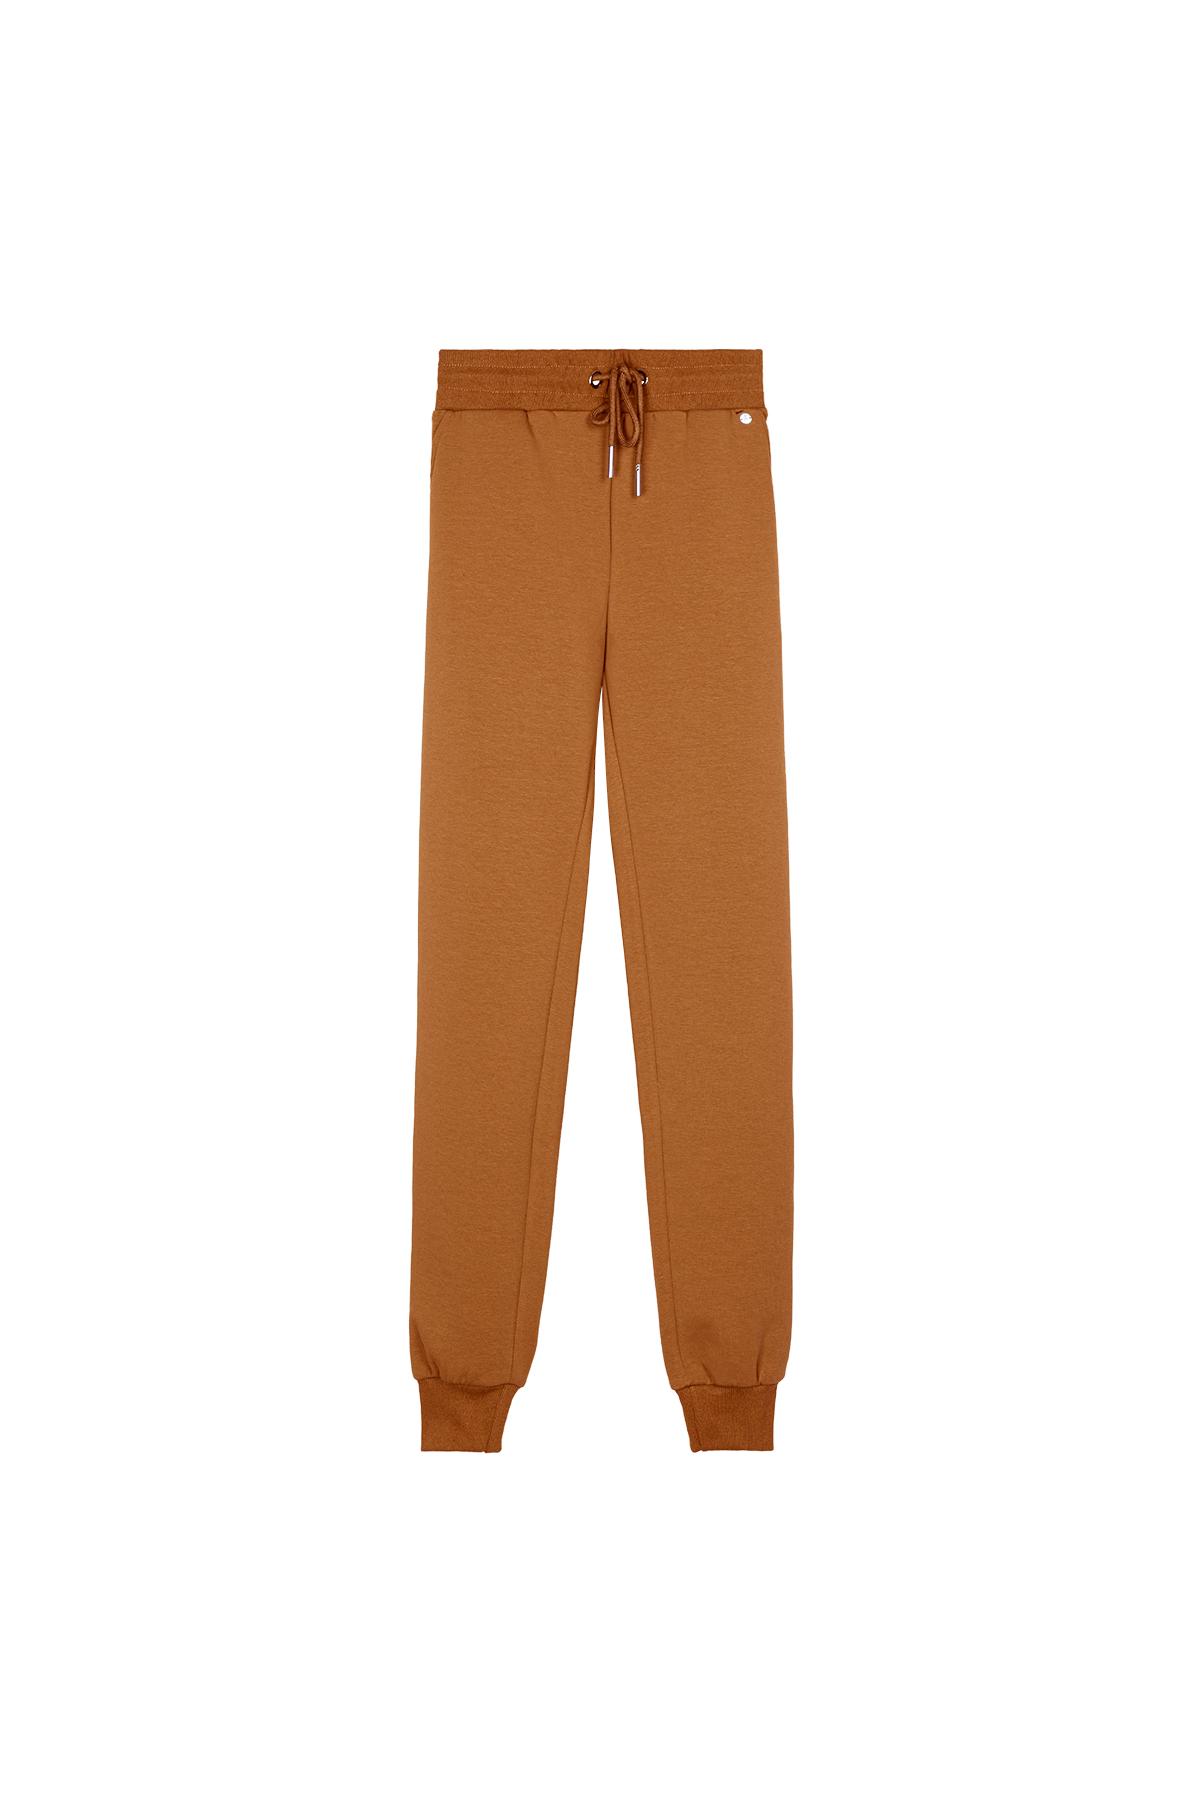 Comy pants loungewear Orange XL h5 